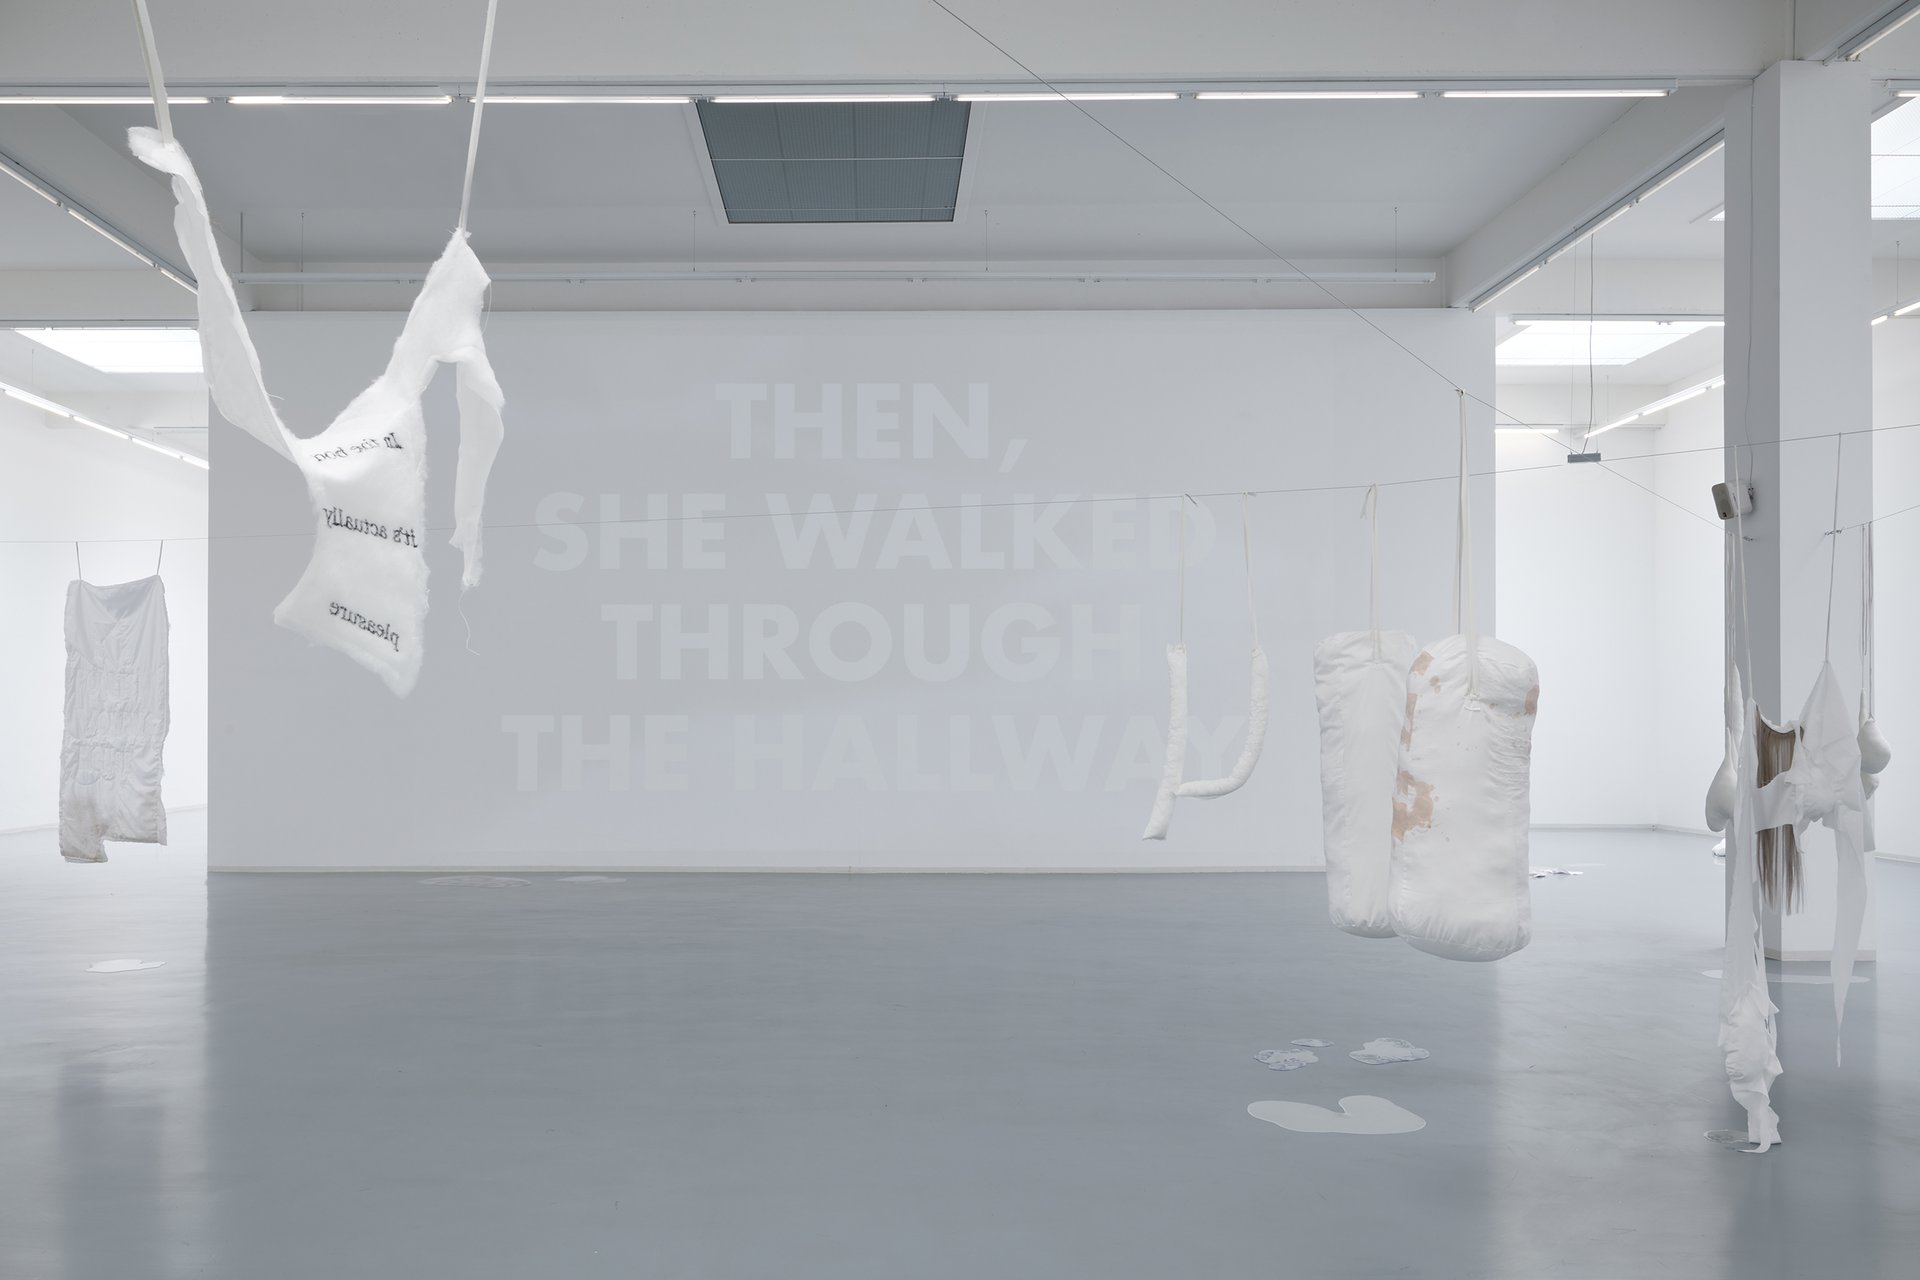 Franca Scholz, installation view, 2020, Bonner Kunstverein, courtesy of the artist. Photo: Mareike Tocha